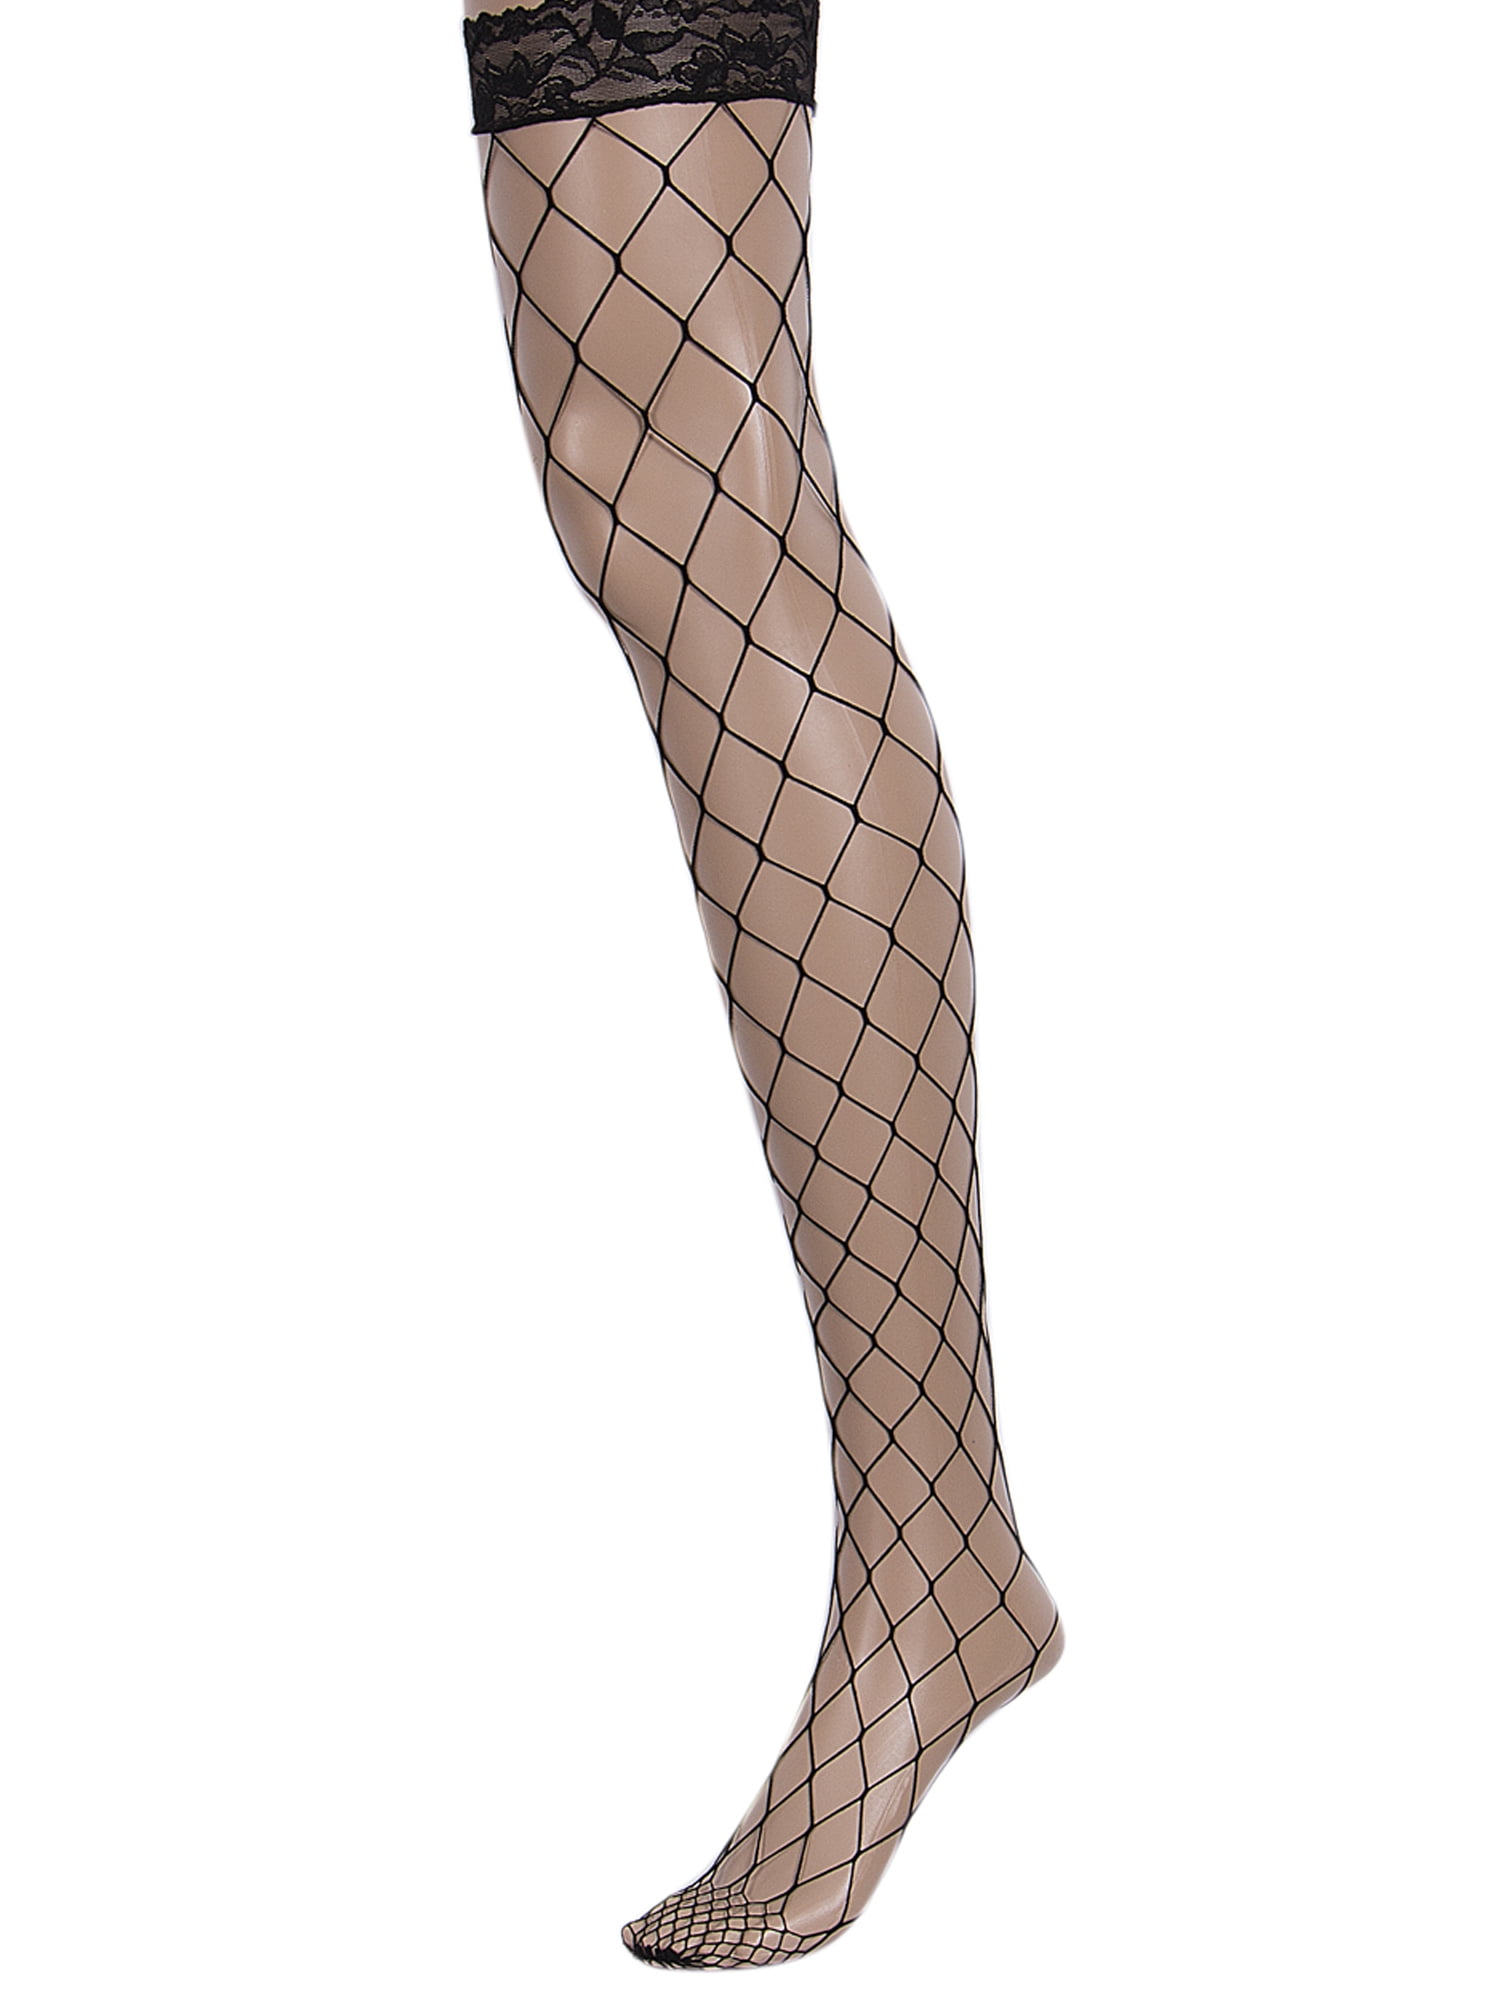 PUAO Female Silica gel Non-slip Mesh Print Sock Transparent Hosiery Stockings Womens Lace Thigh Highs Stockings